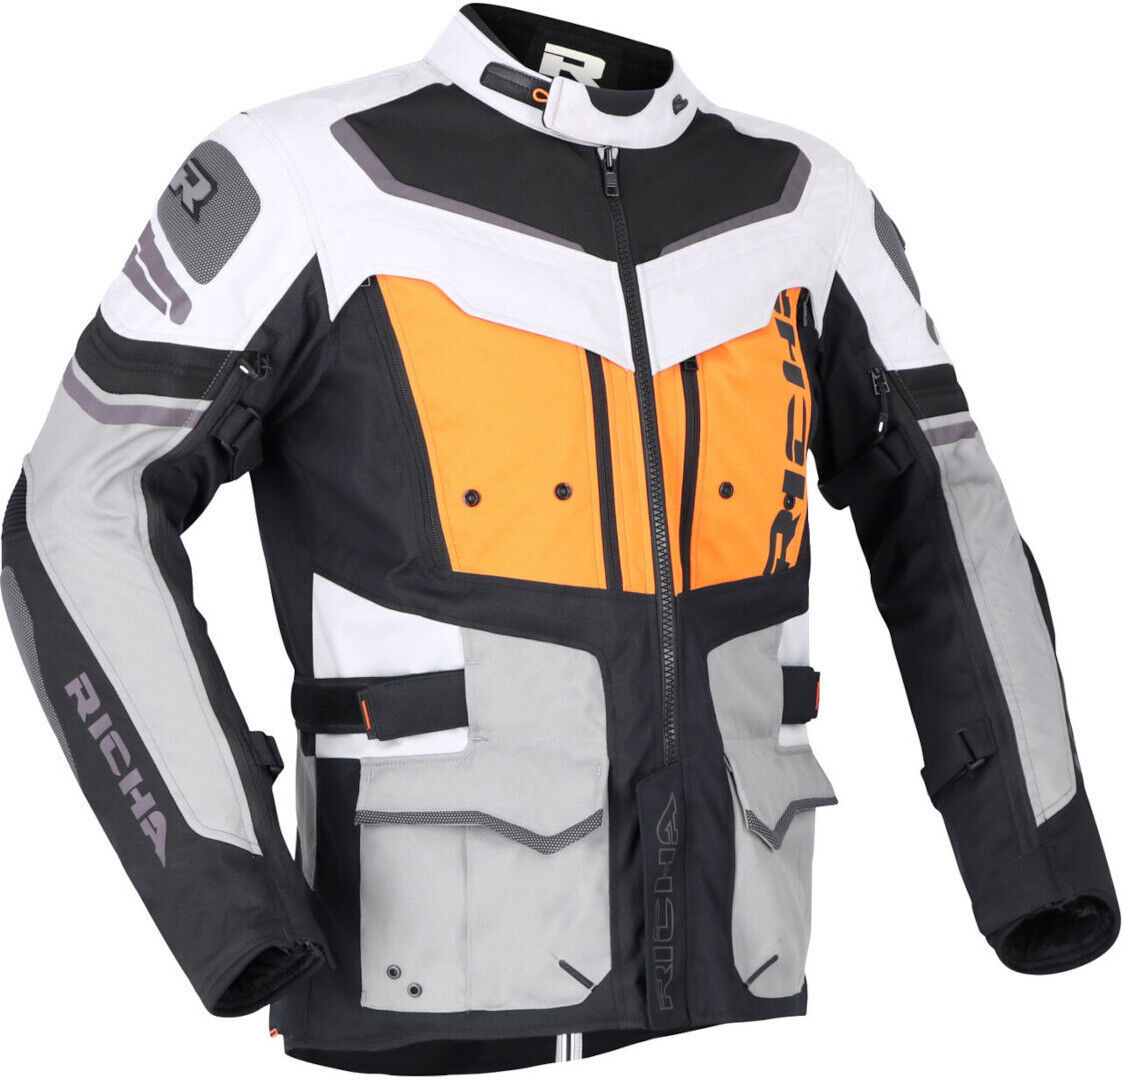 Richa Infinity 2 Adventure chaqueta textil impermeable para motocicleta - Negro Gris Naranja (XL)